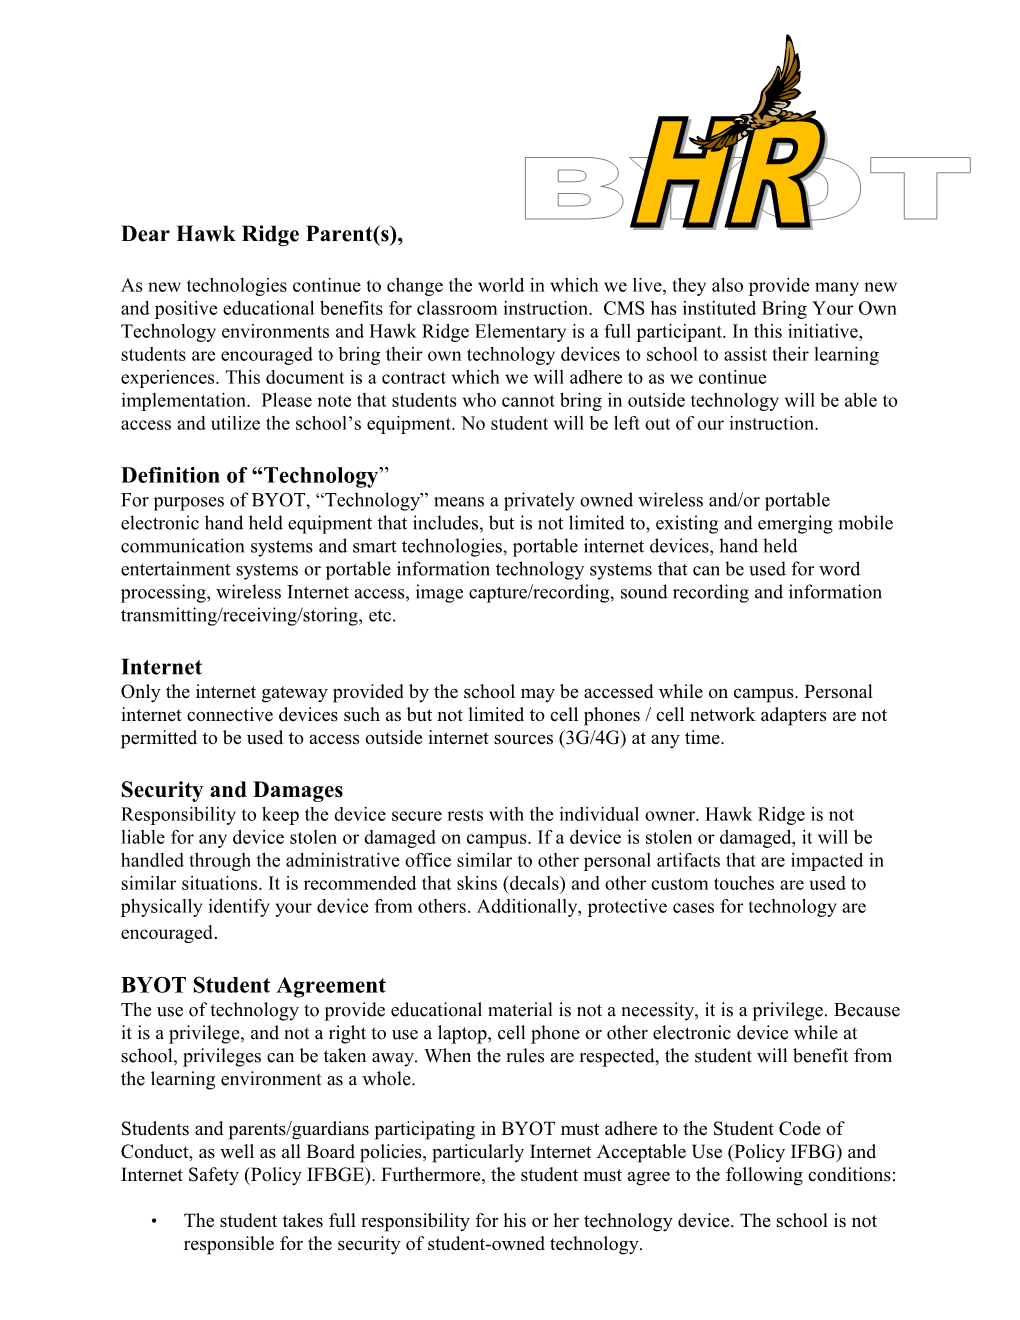 Dear Hawk Ridge Parent(S)